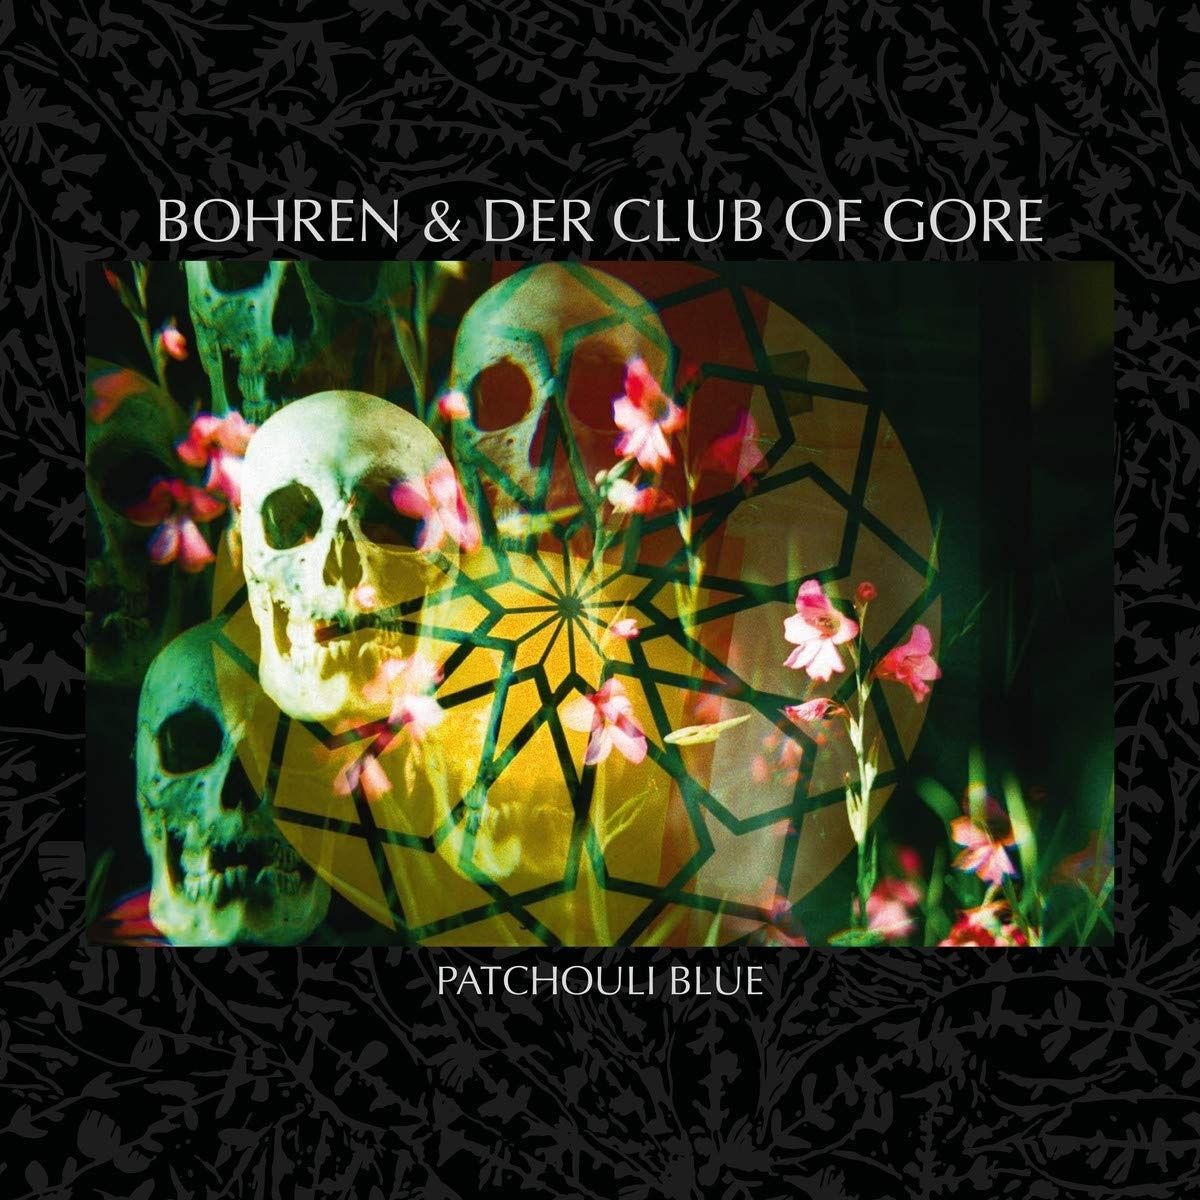 Обложка альбома Bohren & Der Club Of Gore - Patchouli Blue (2020).